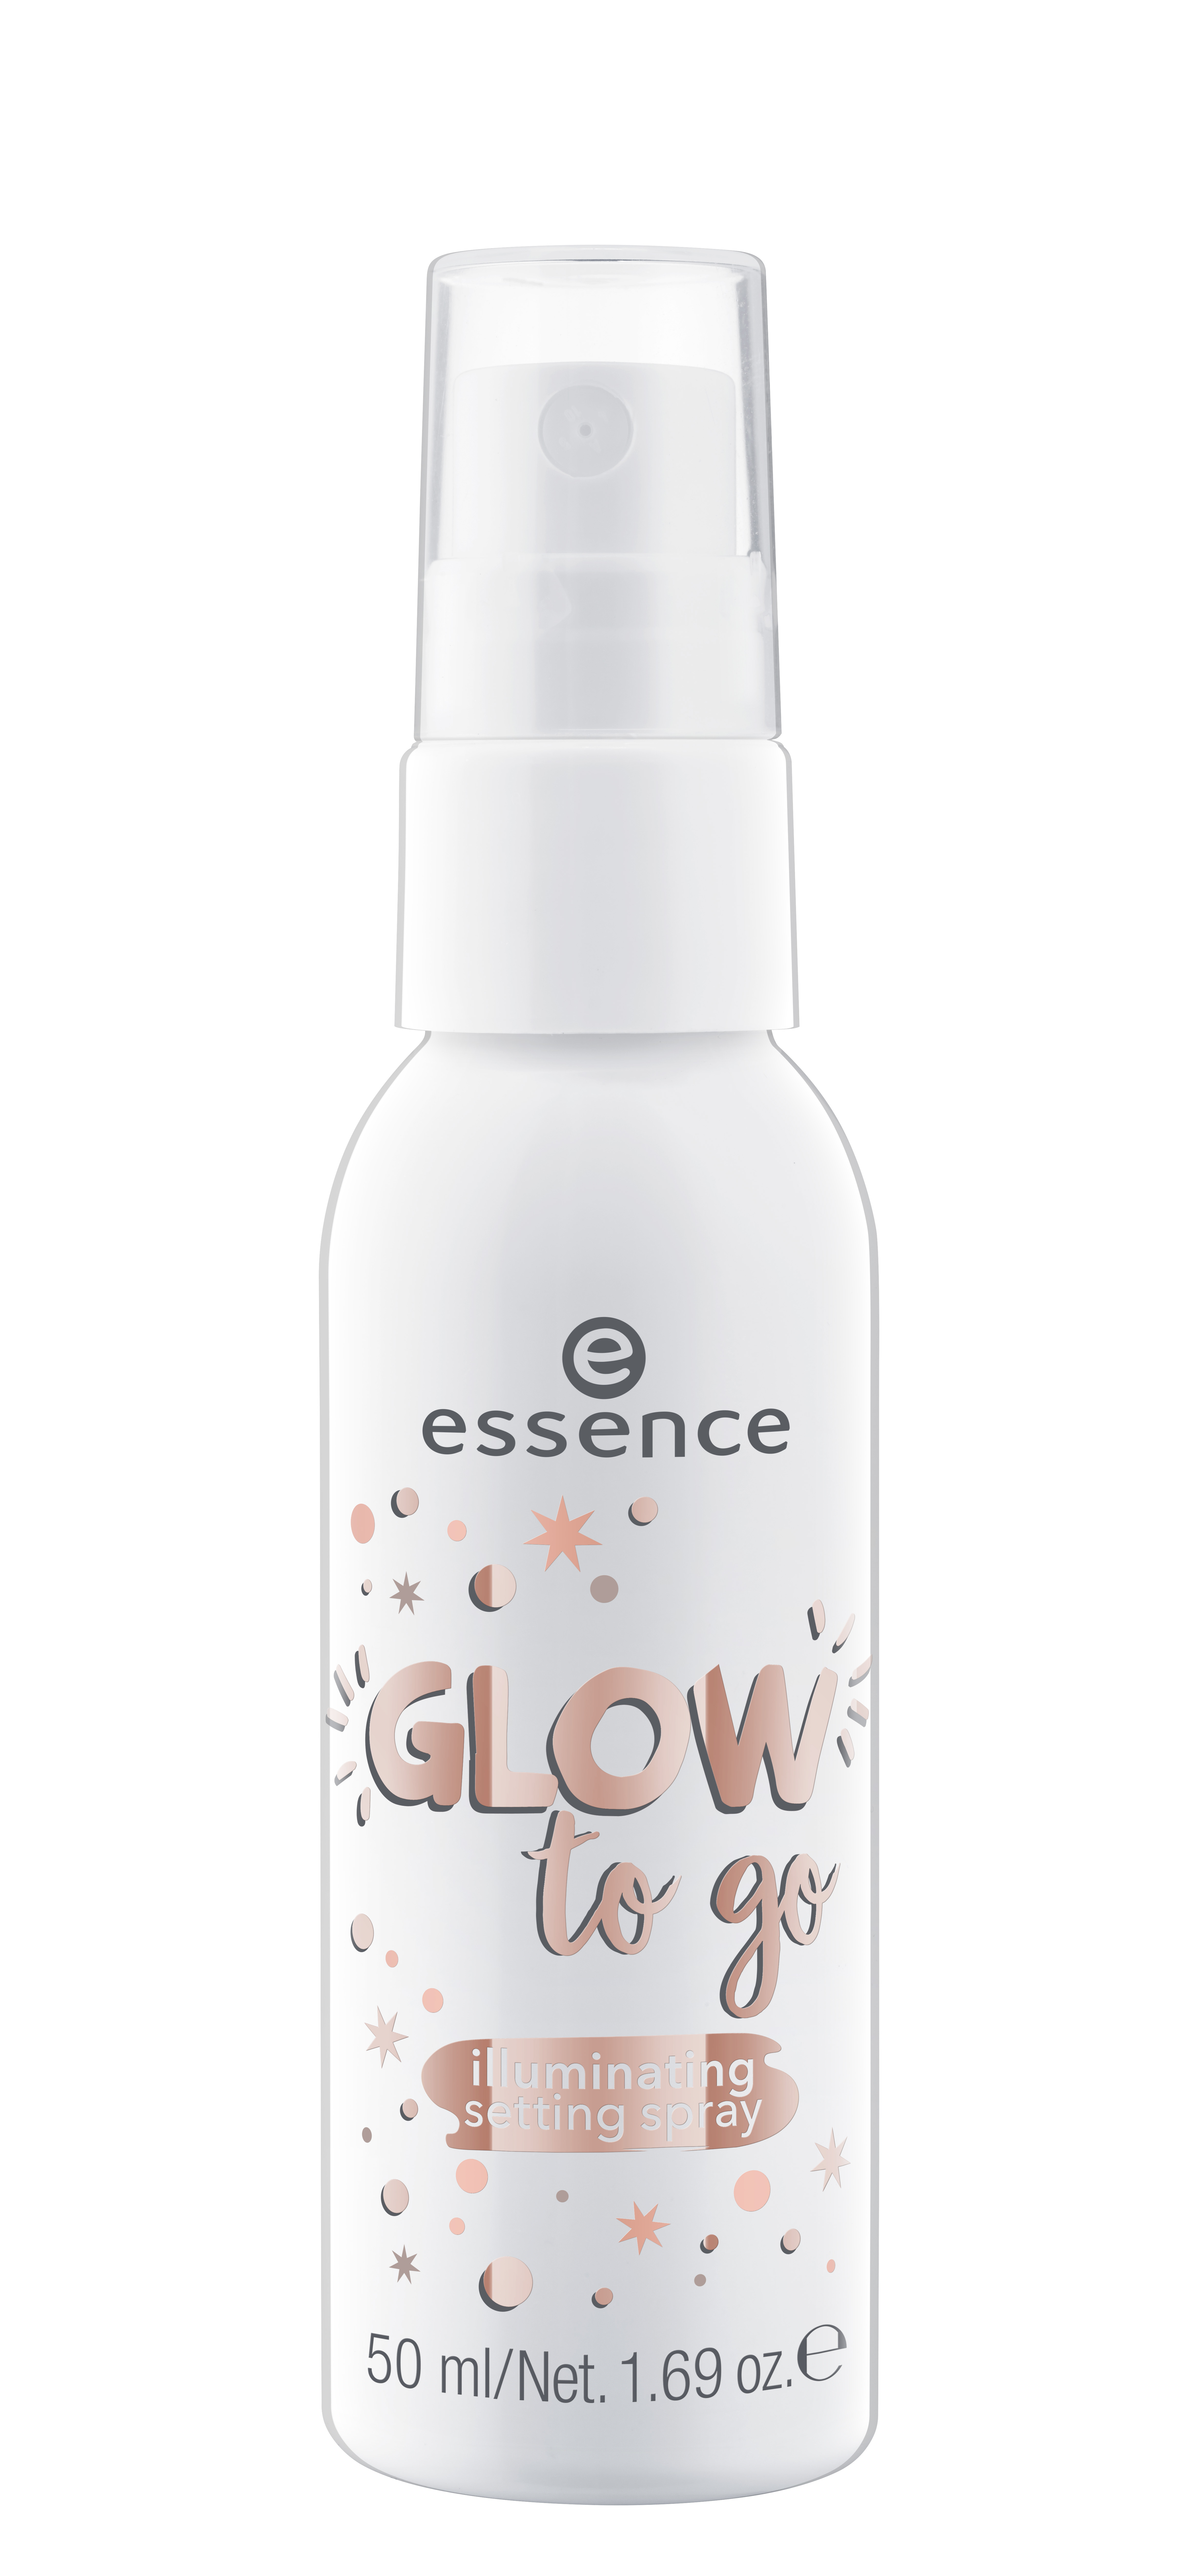 ess. glow to go illuminating setting spray